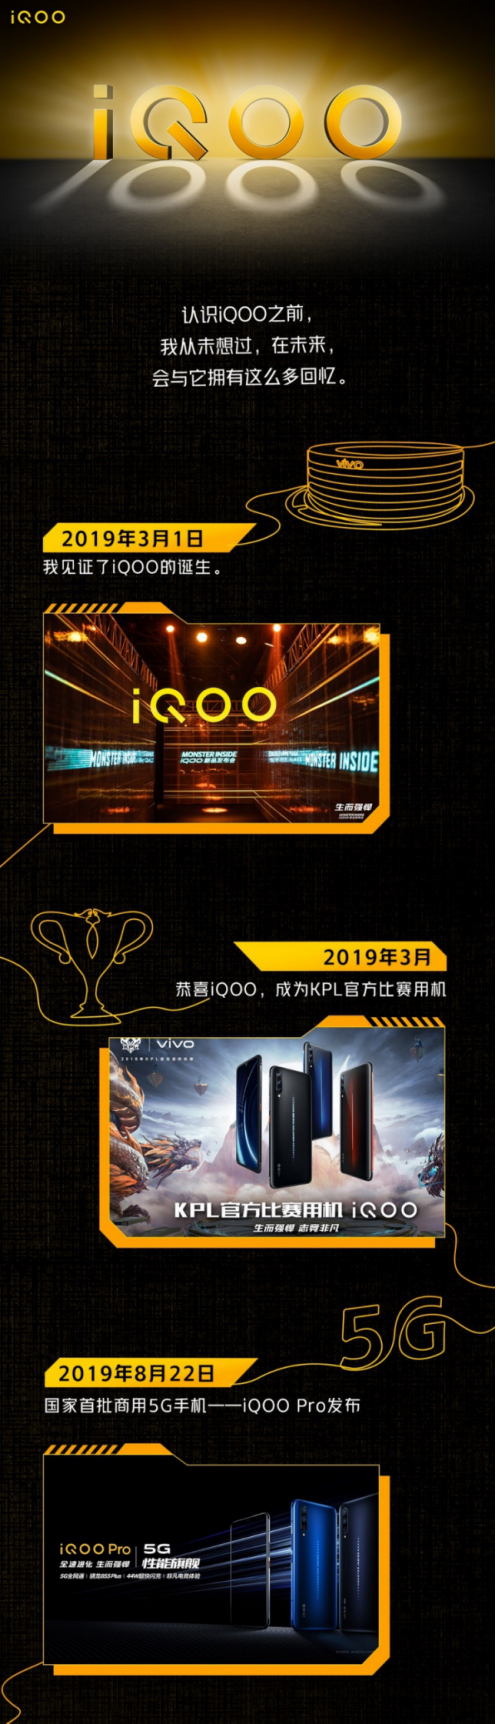 【iQOO资讯】生而强悍探索不止，iQOO庆品牌诞生千天 (1)542.jpg